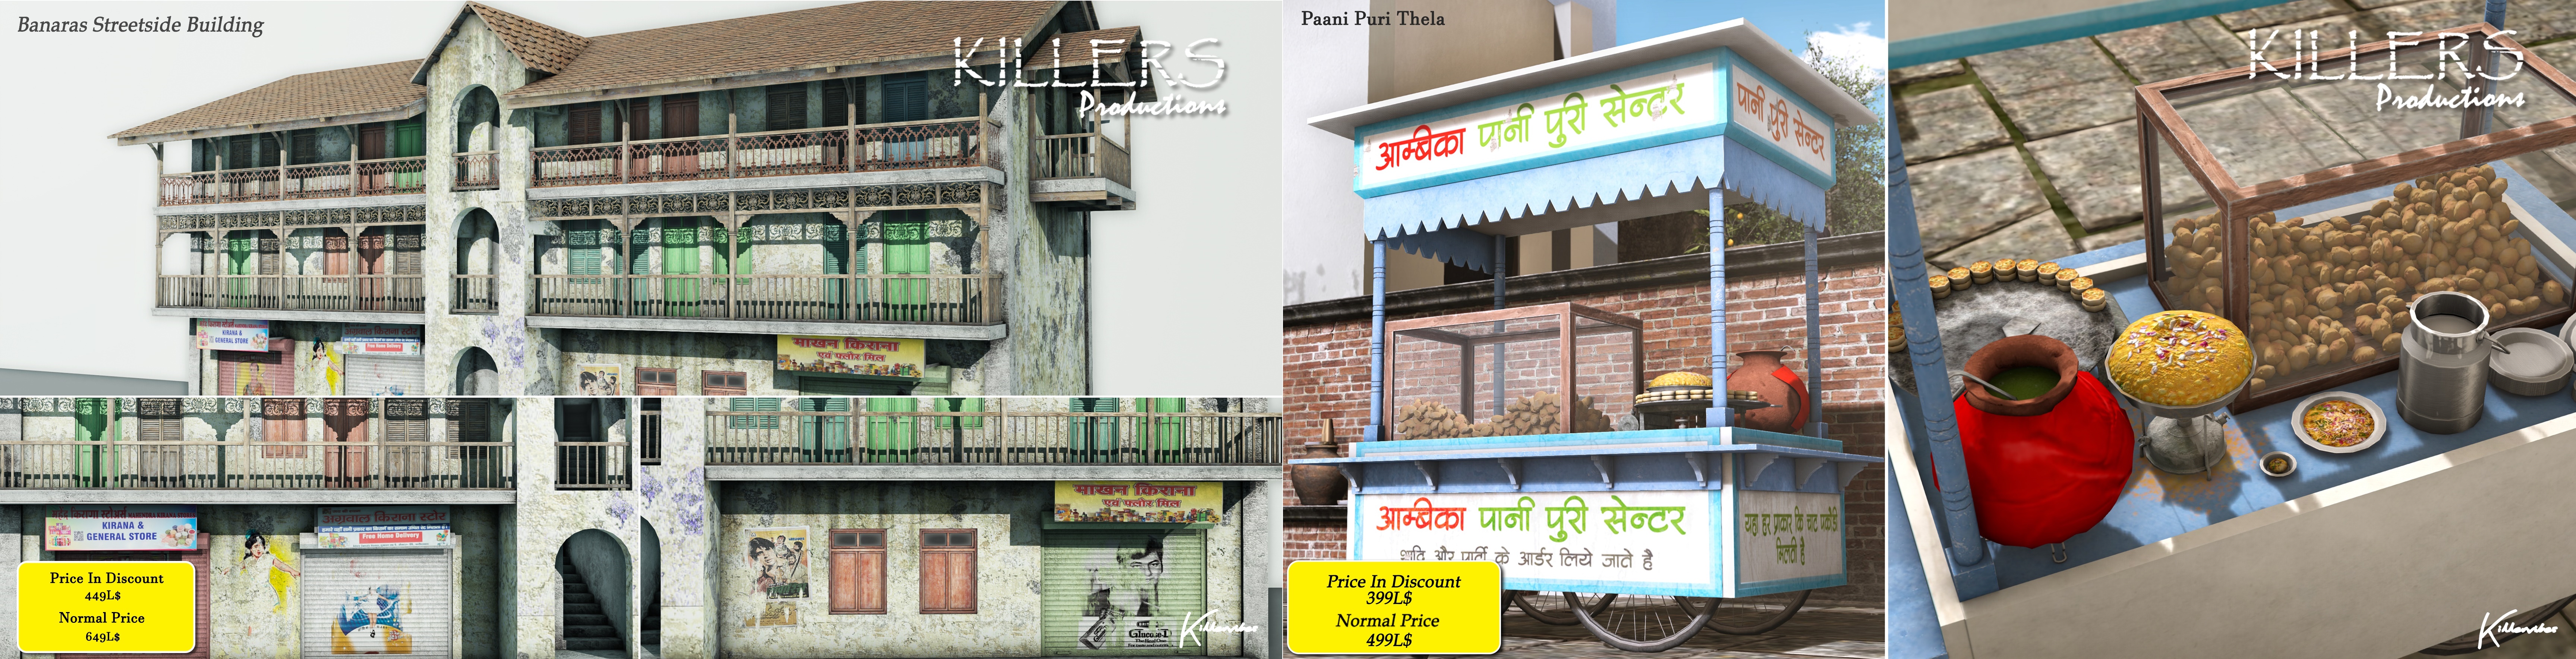 Killer’s Productions – Banaras Streetside Building & Paani Puri Thela